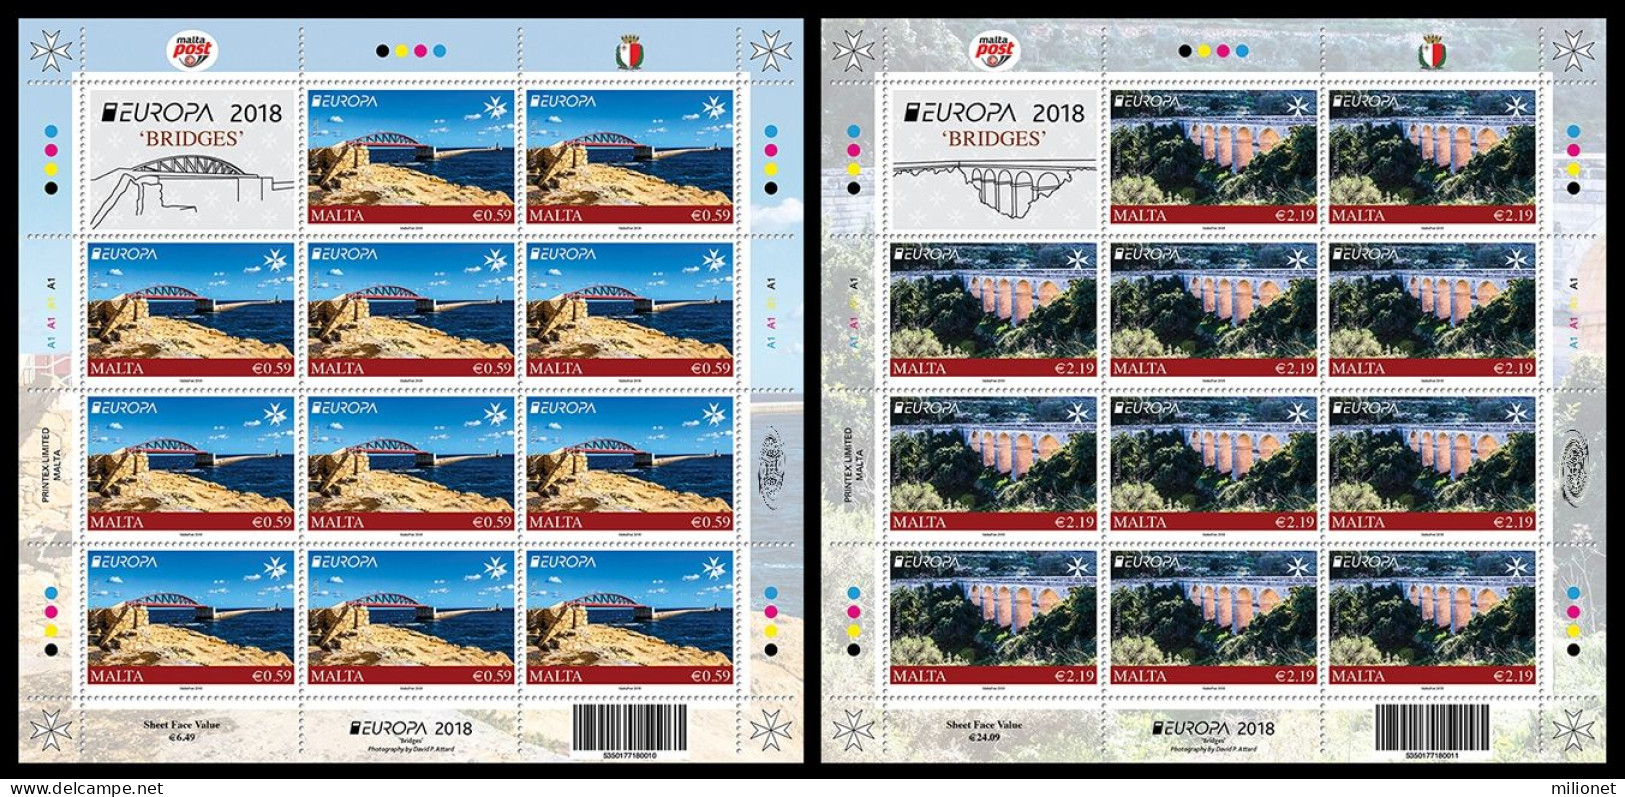 SALE!!! MALTA 2018 EUROPA CEPT BRIDGES 2 Sheetlets Of 11 Stamps + 1 Vignette MNH ** - 2018